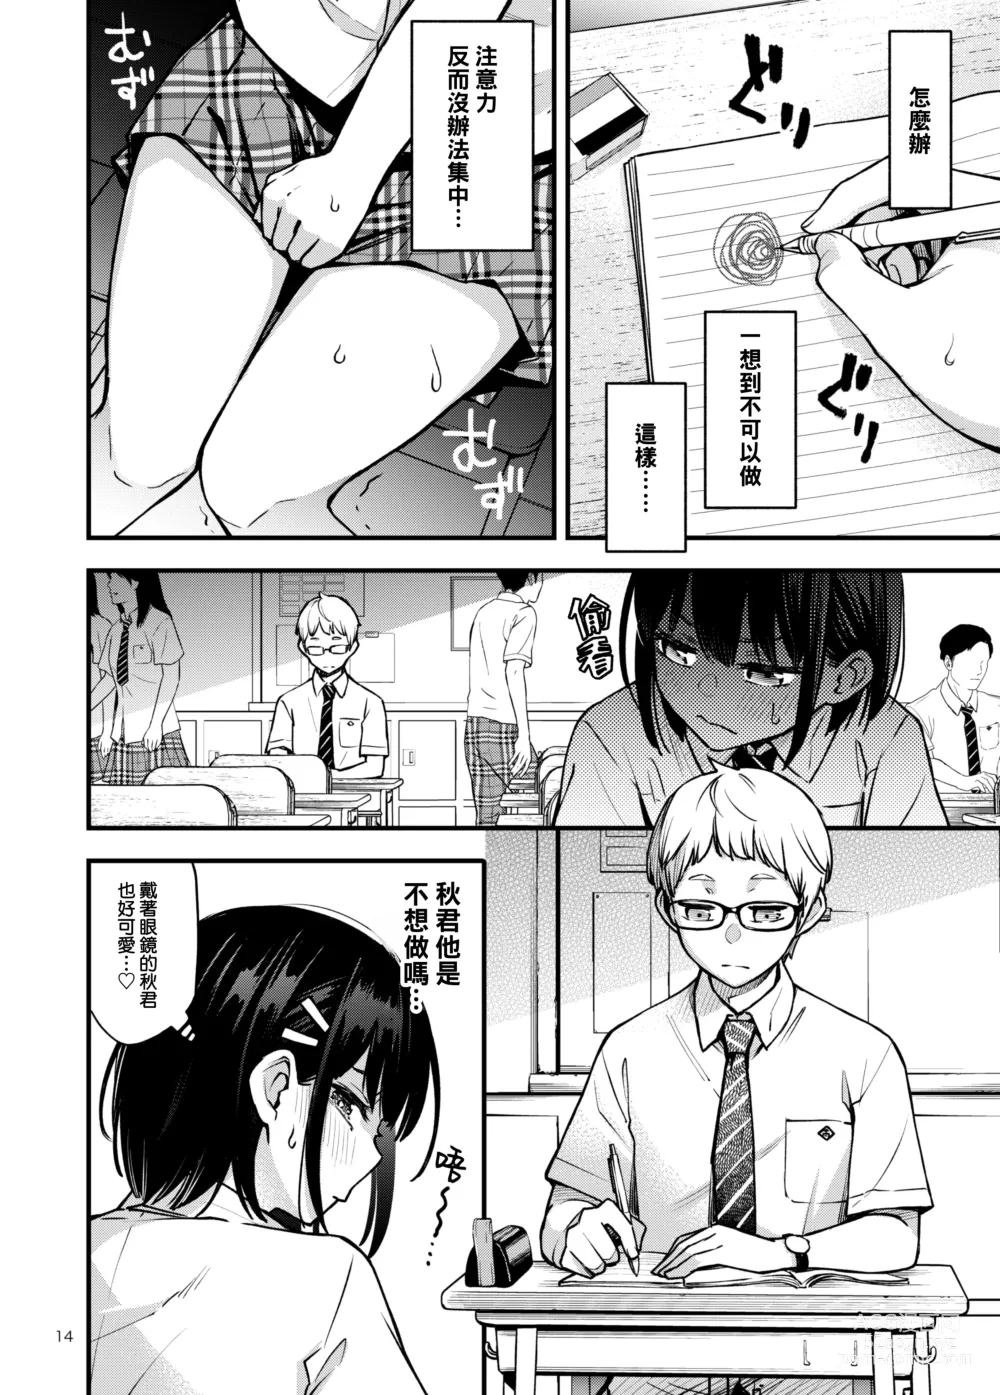 Page 14 of doujinshi 与处男初体验时觉醒的处女 2 #1-4